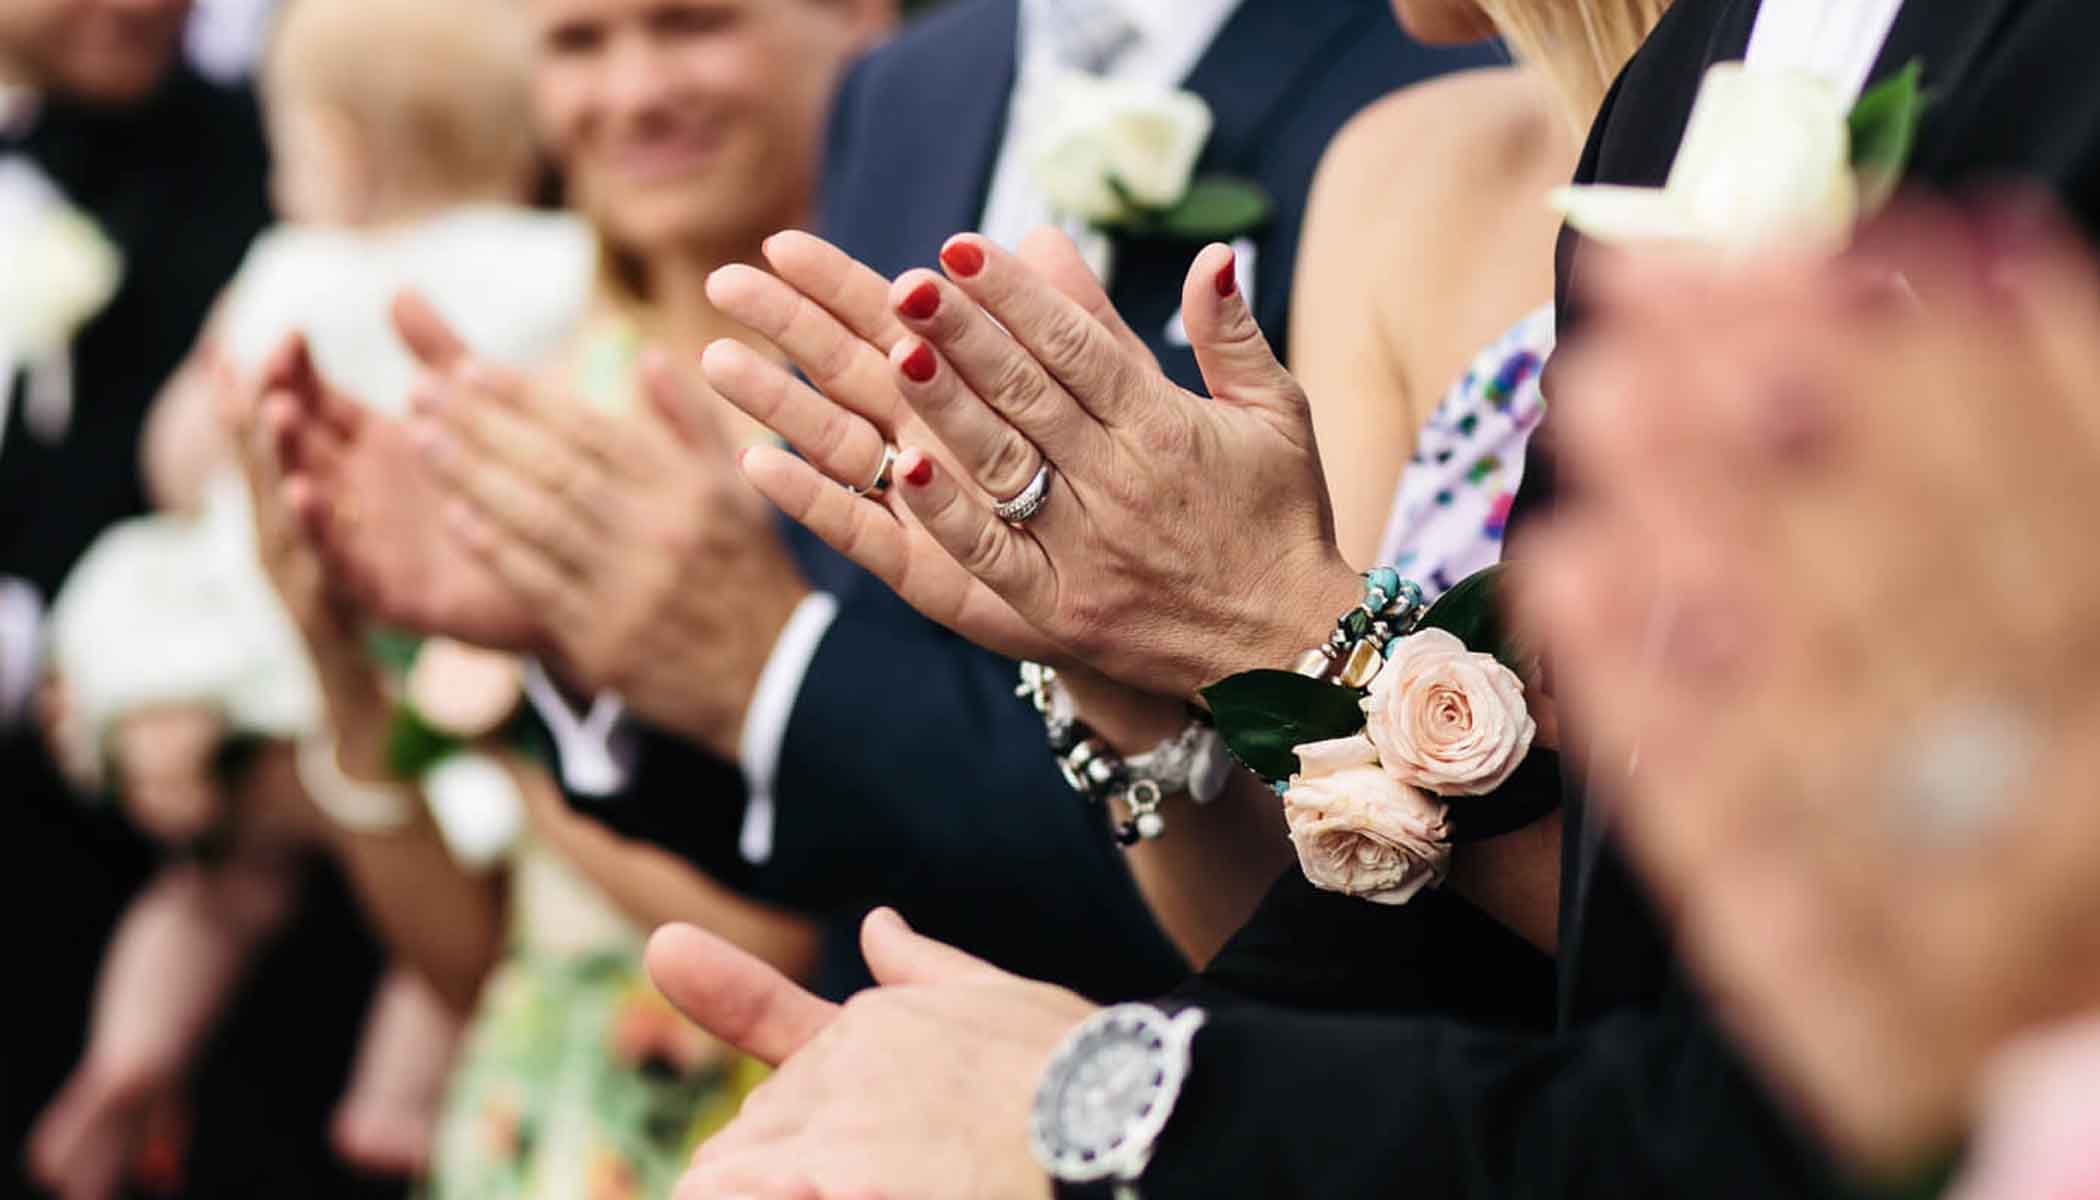 لیست مهمانان عروسی